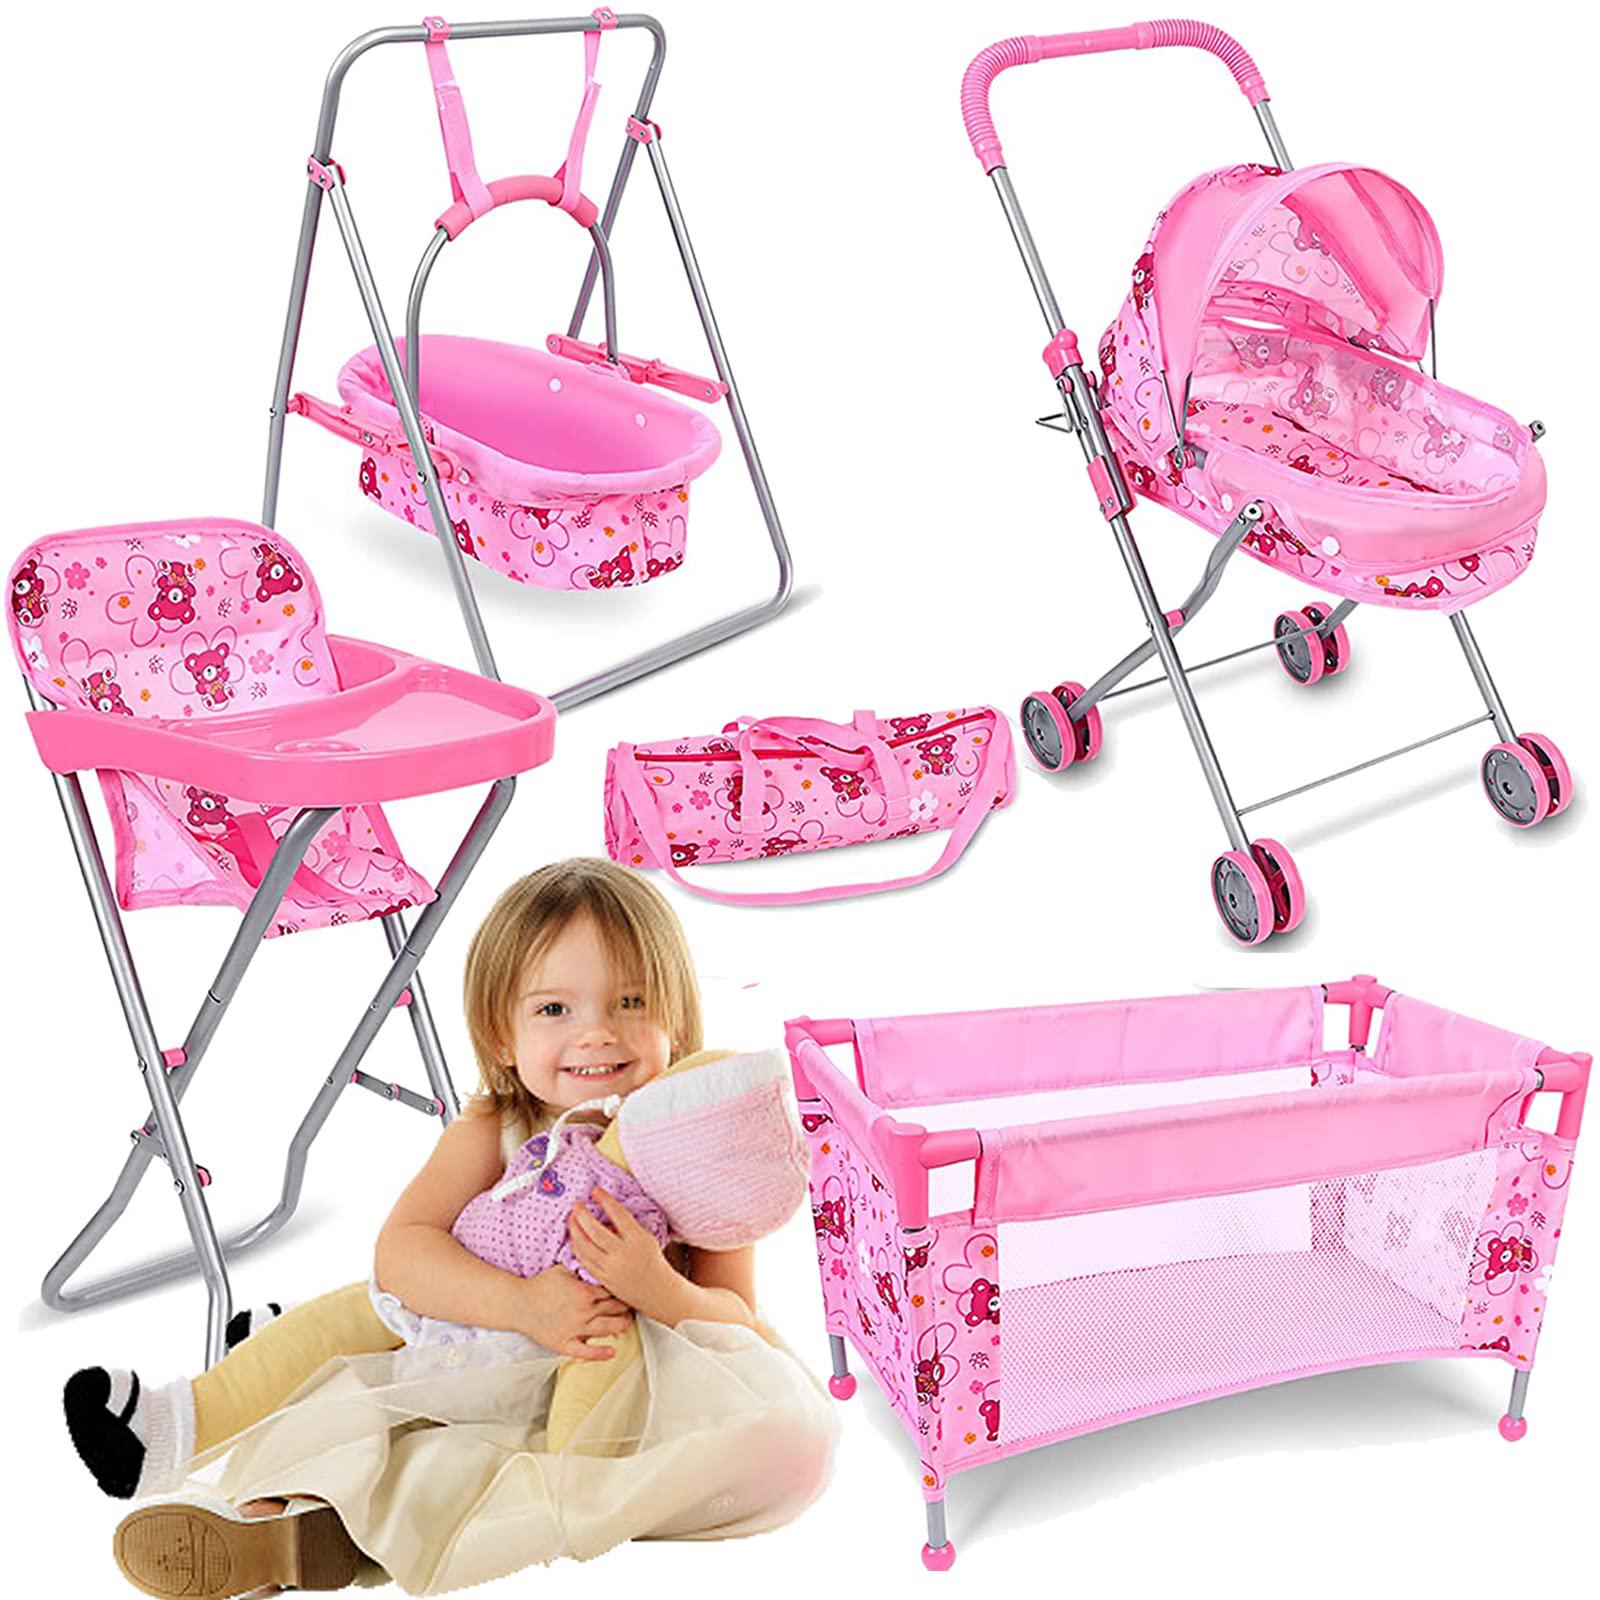 XIDAJIE stroller for dolls baby doll stroller set fits 16" dolls - 4 pcs baby doll playset with foldable doll stroller,doll crib,doll